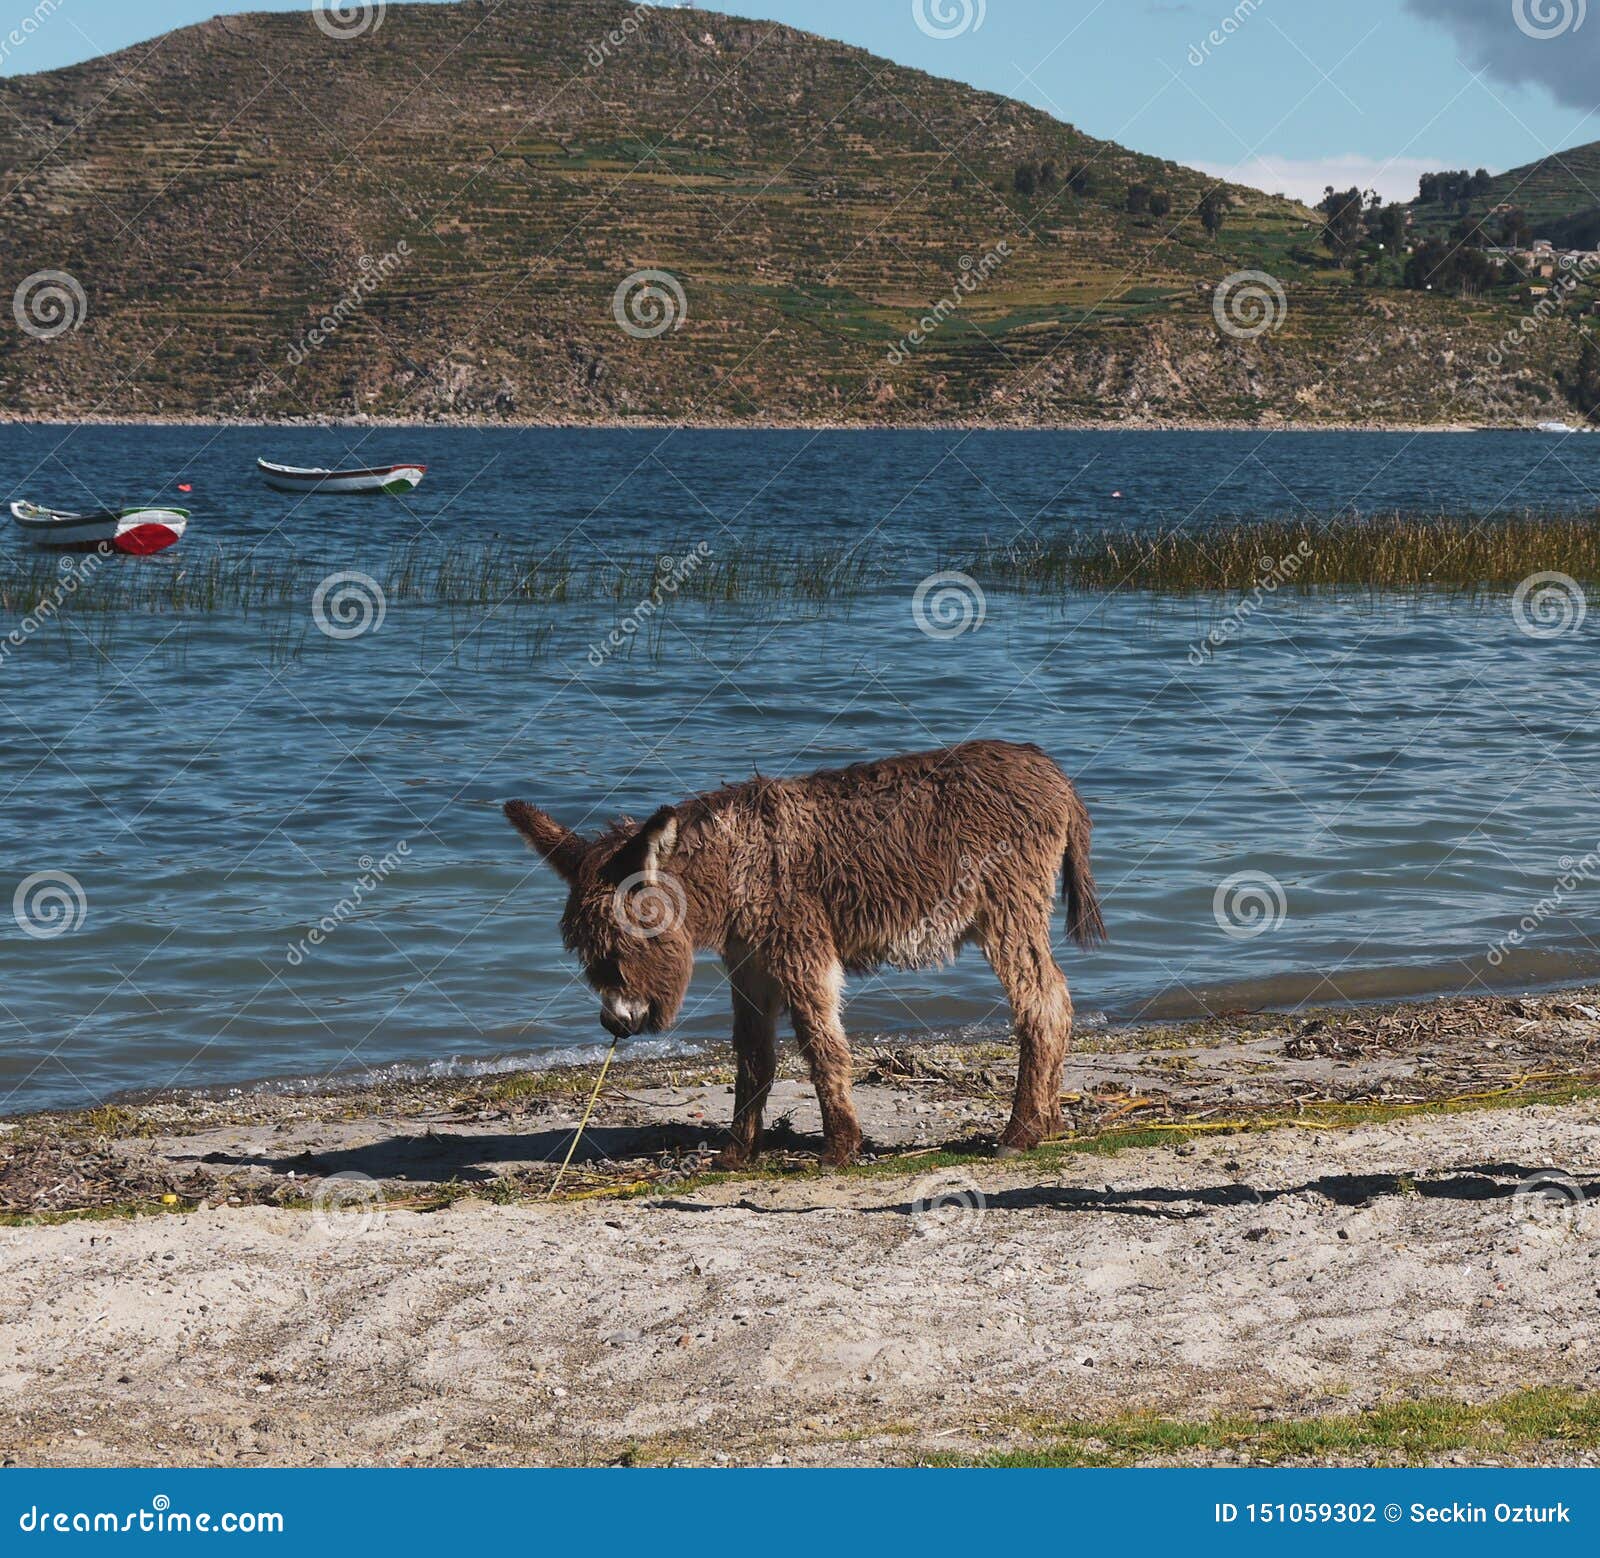 donkey in a field of salar de uyuni in bolivia